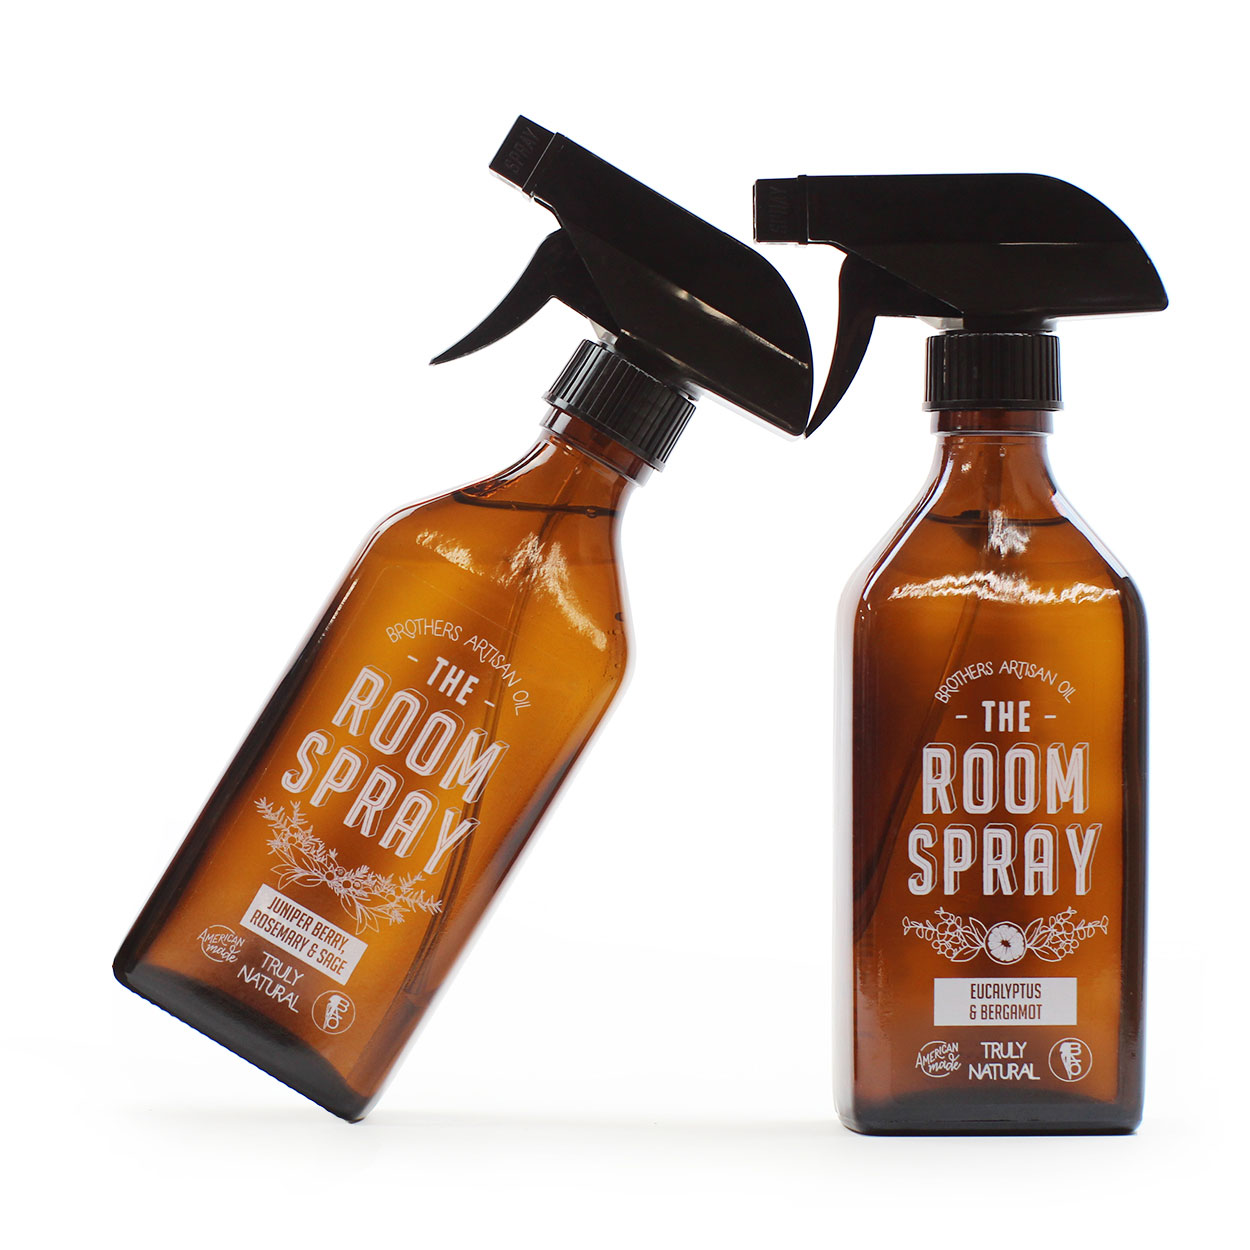 The Room Spray: Eucalyptus & Bergamot